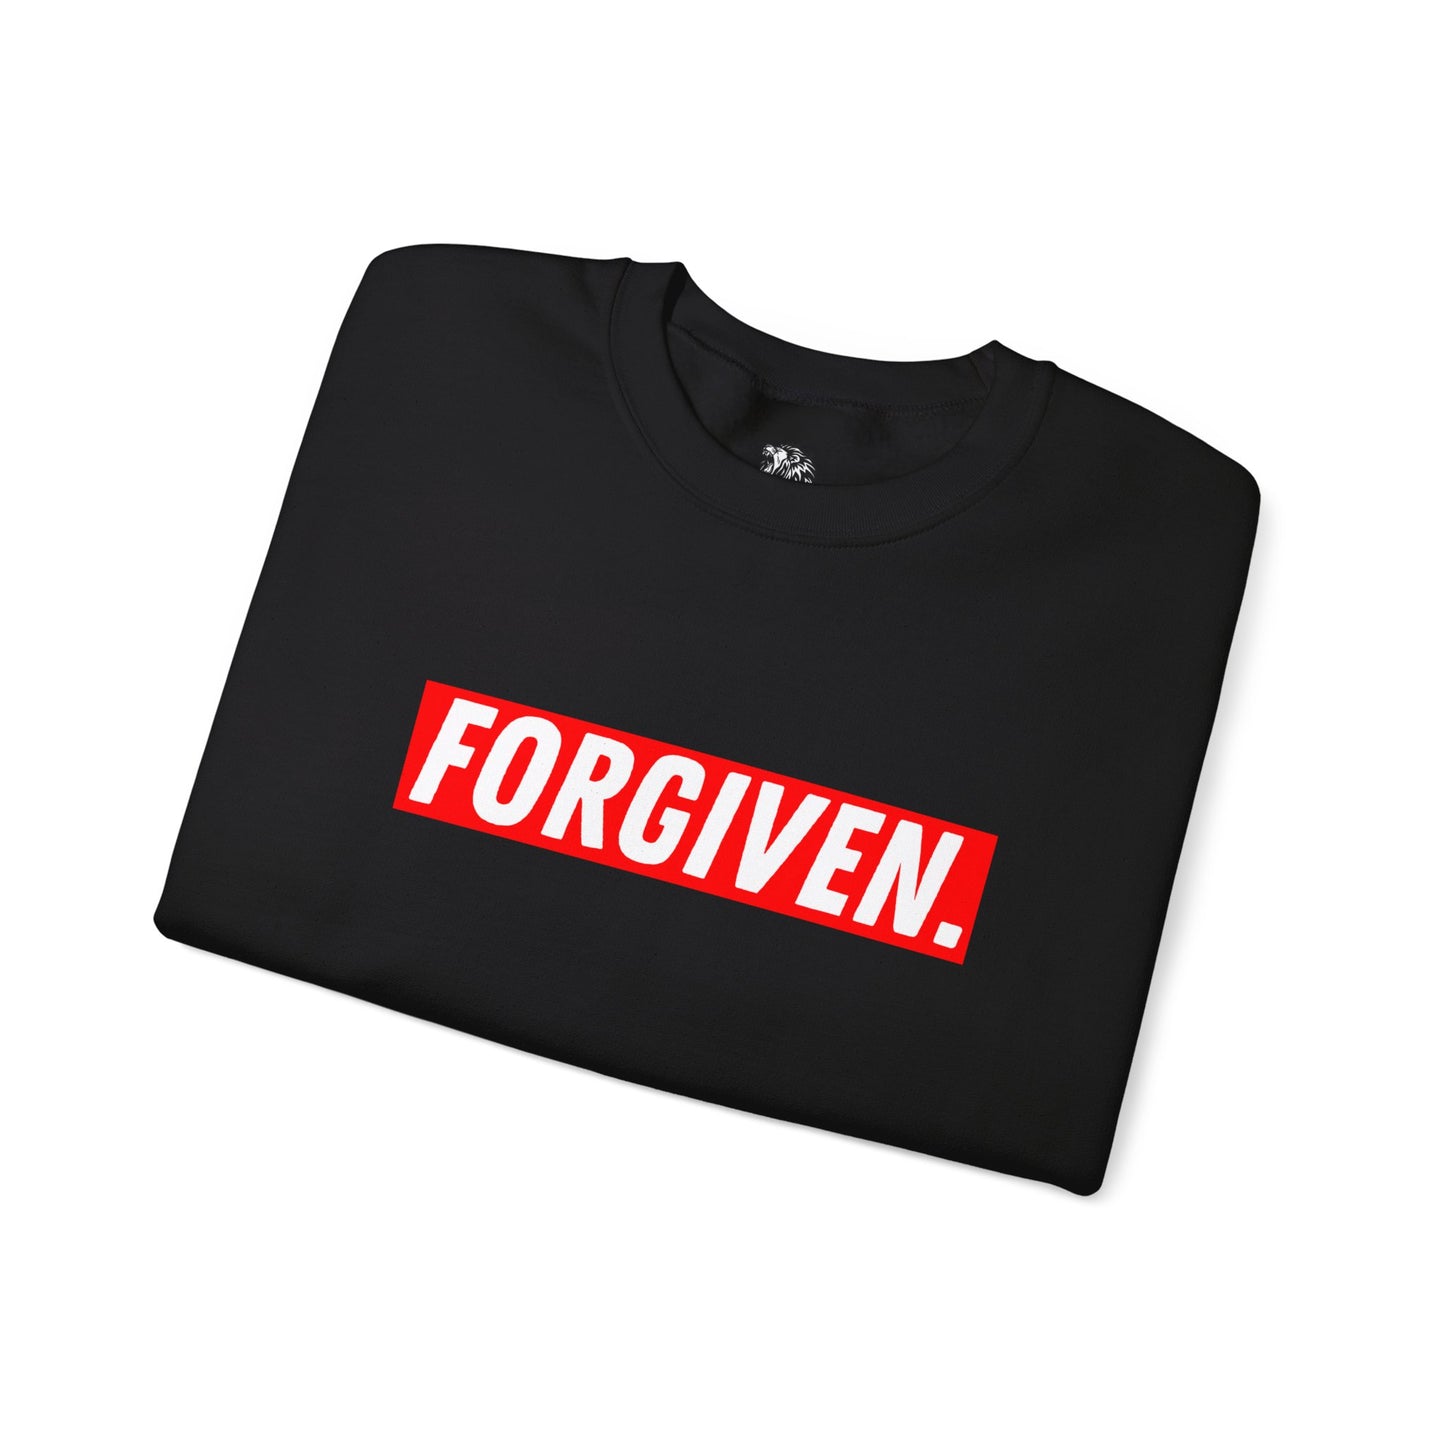 FORGIVEN SWEATSHIRT